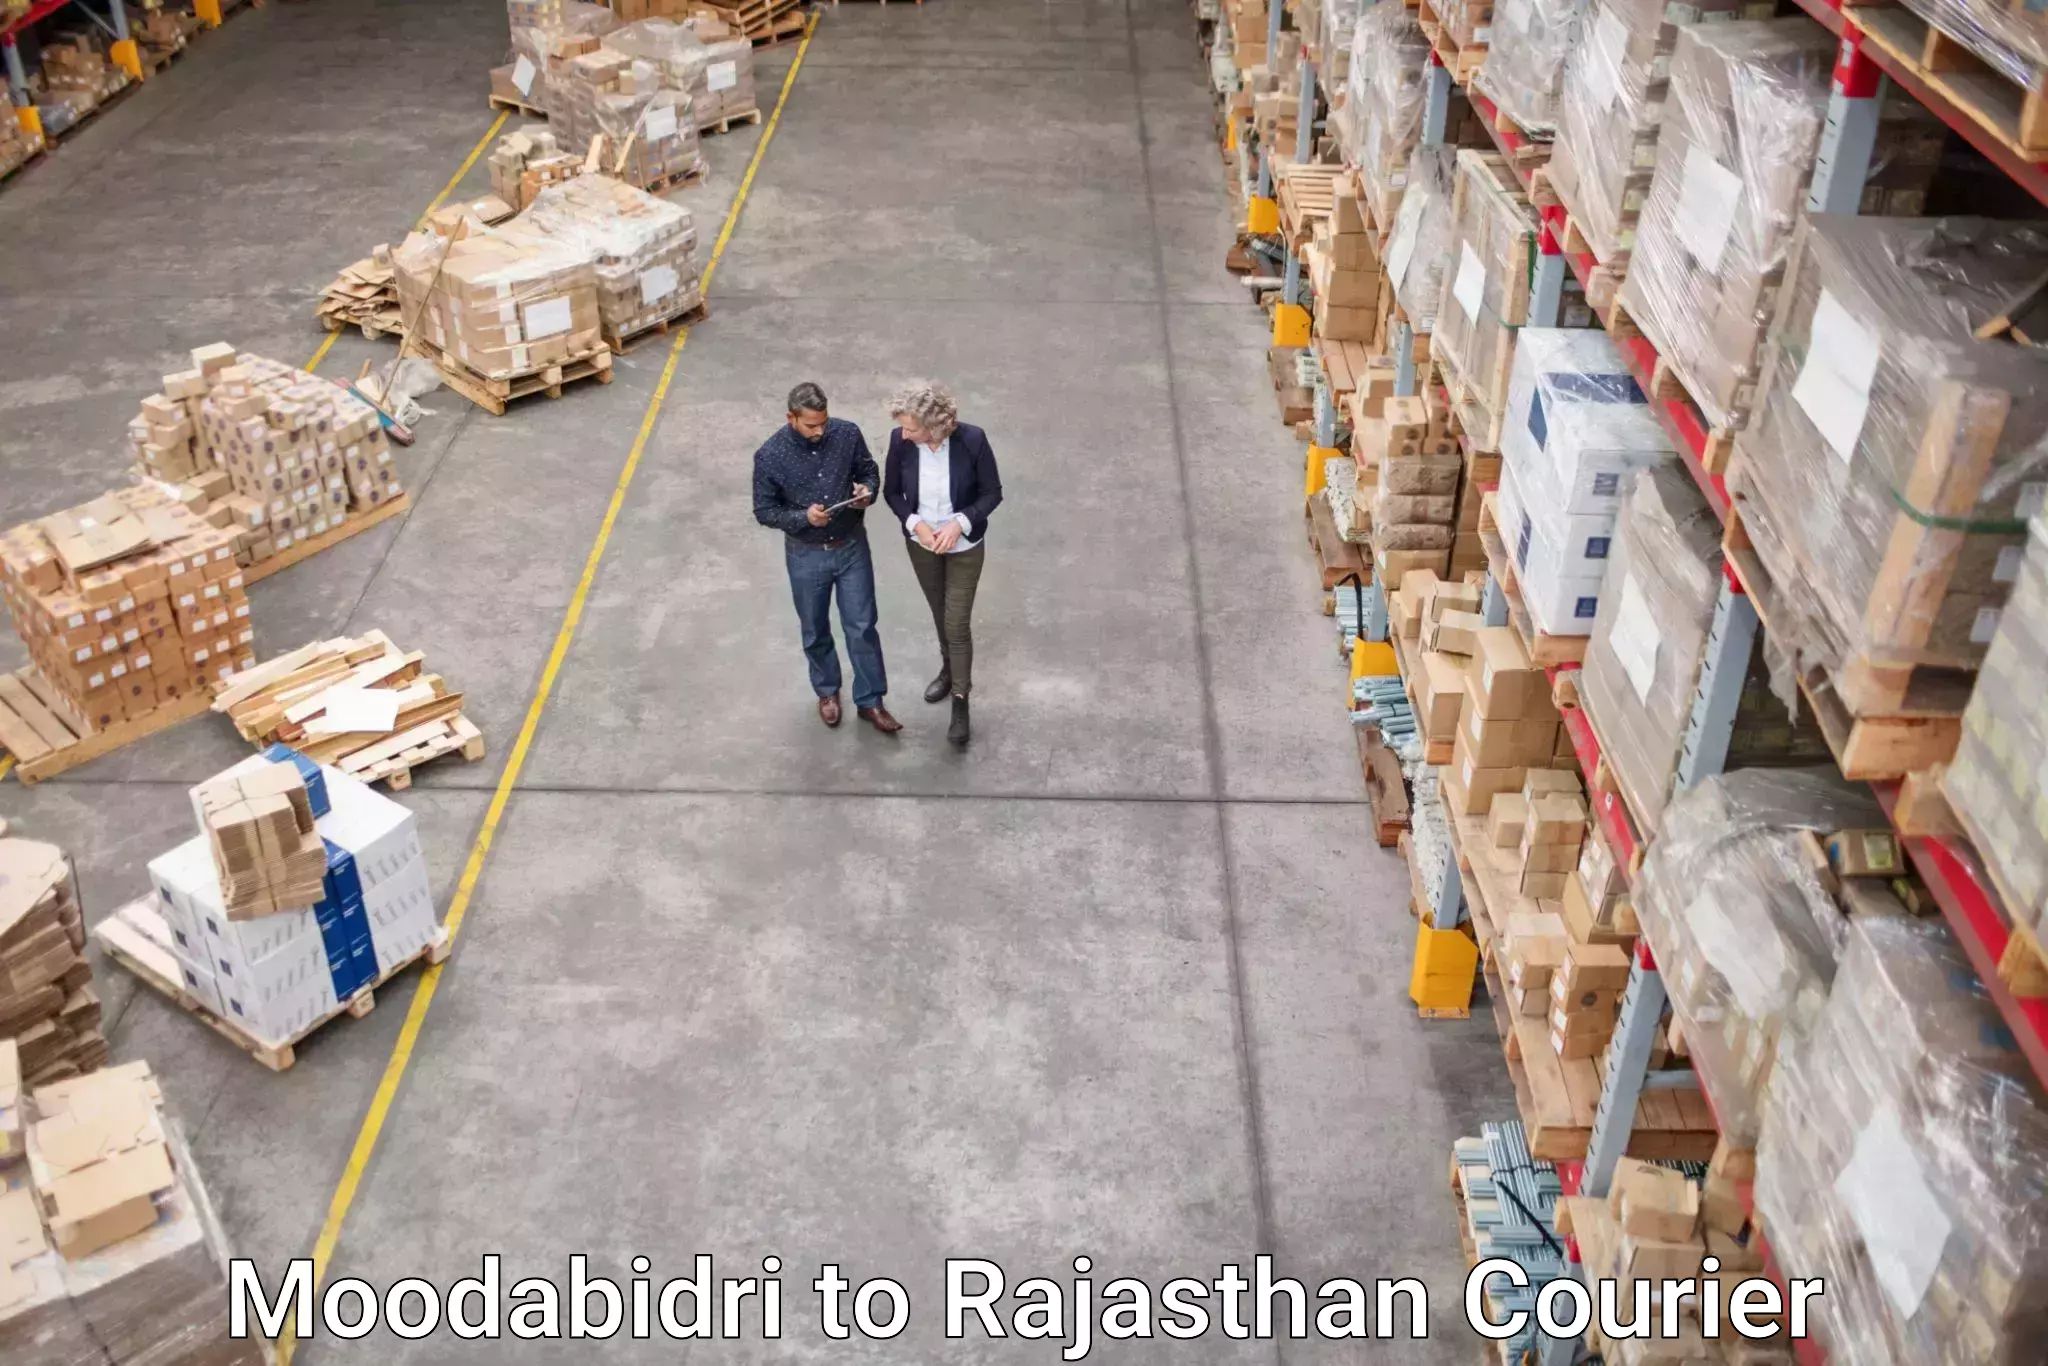 Courier service partnerships Moodabidri to Abu Road